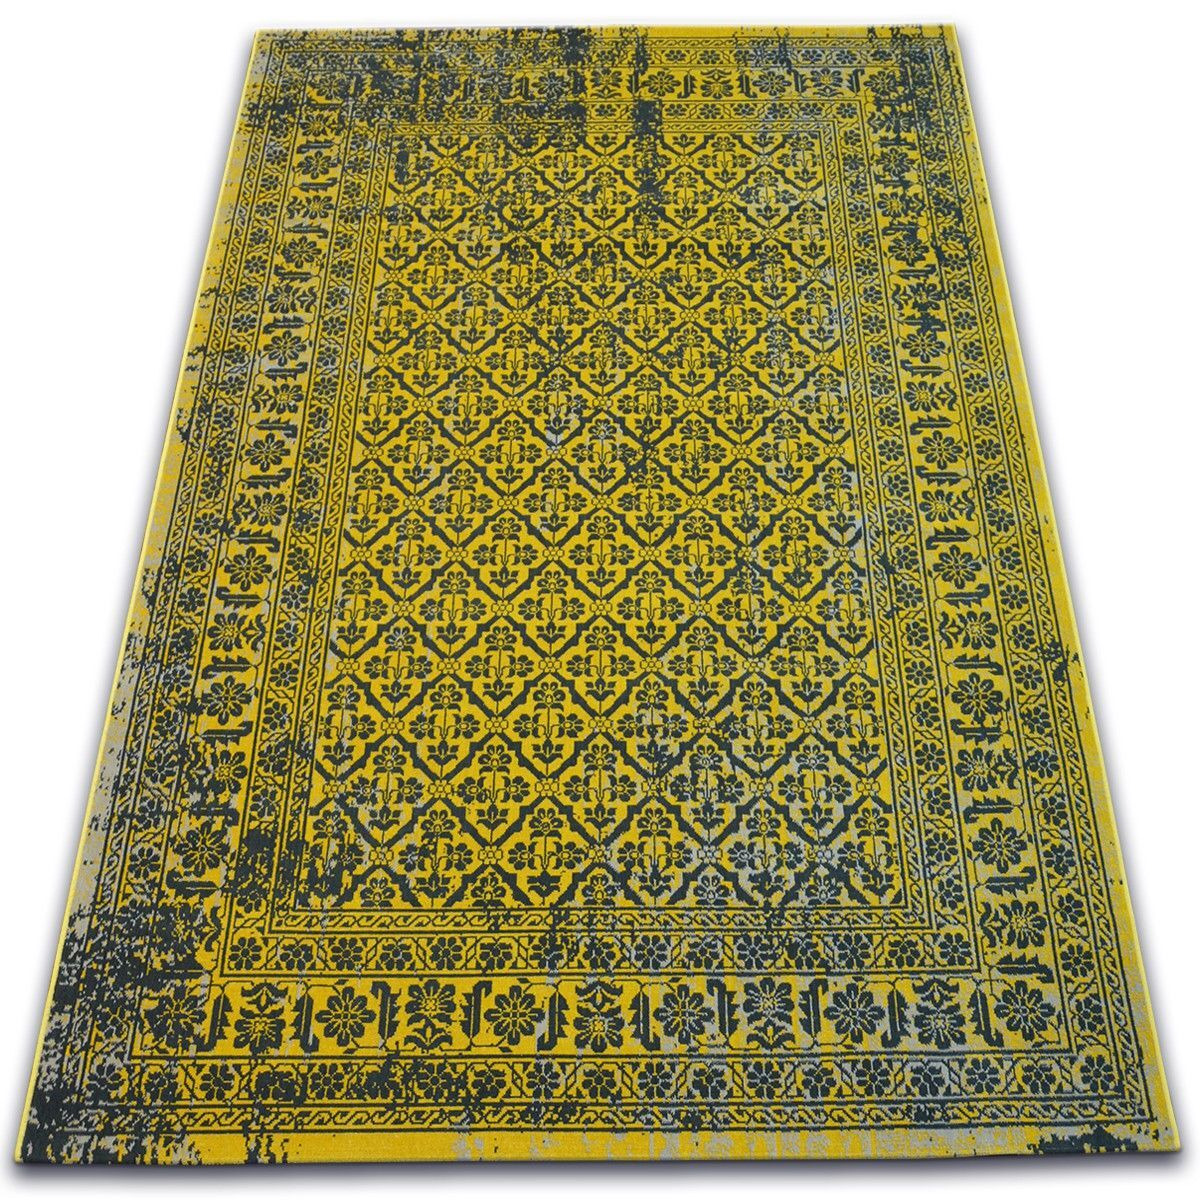 Mario Oriental And Vintage Rug Yellow, 120x170 cm - image 1